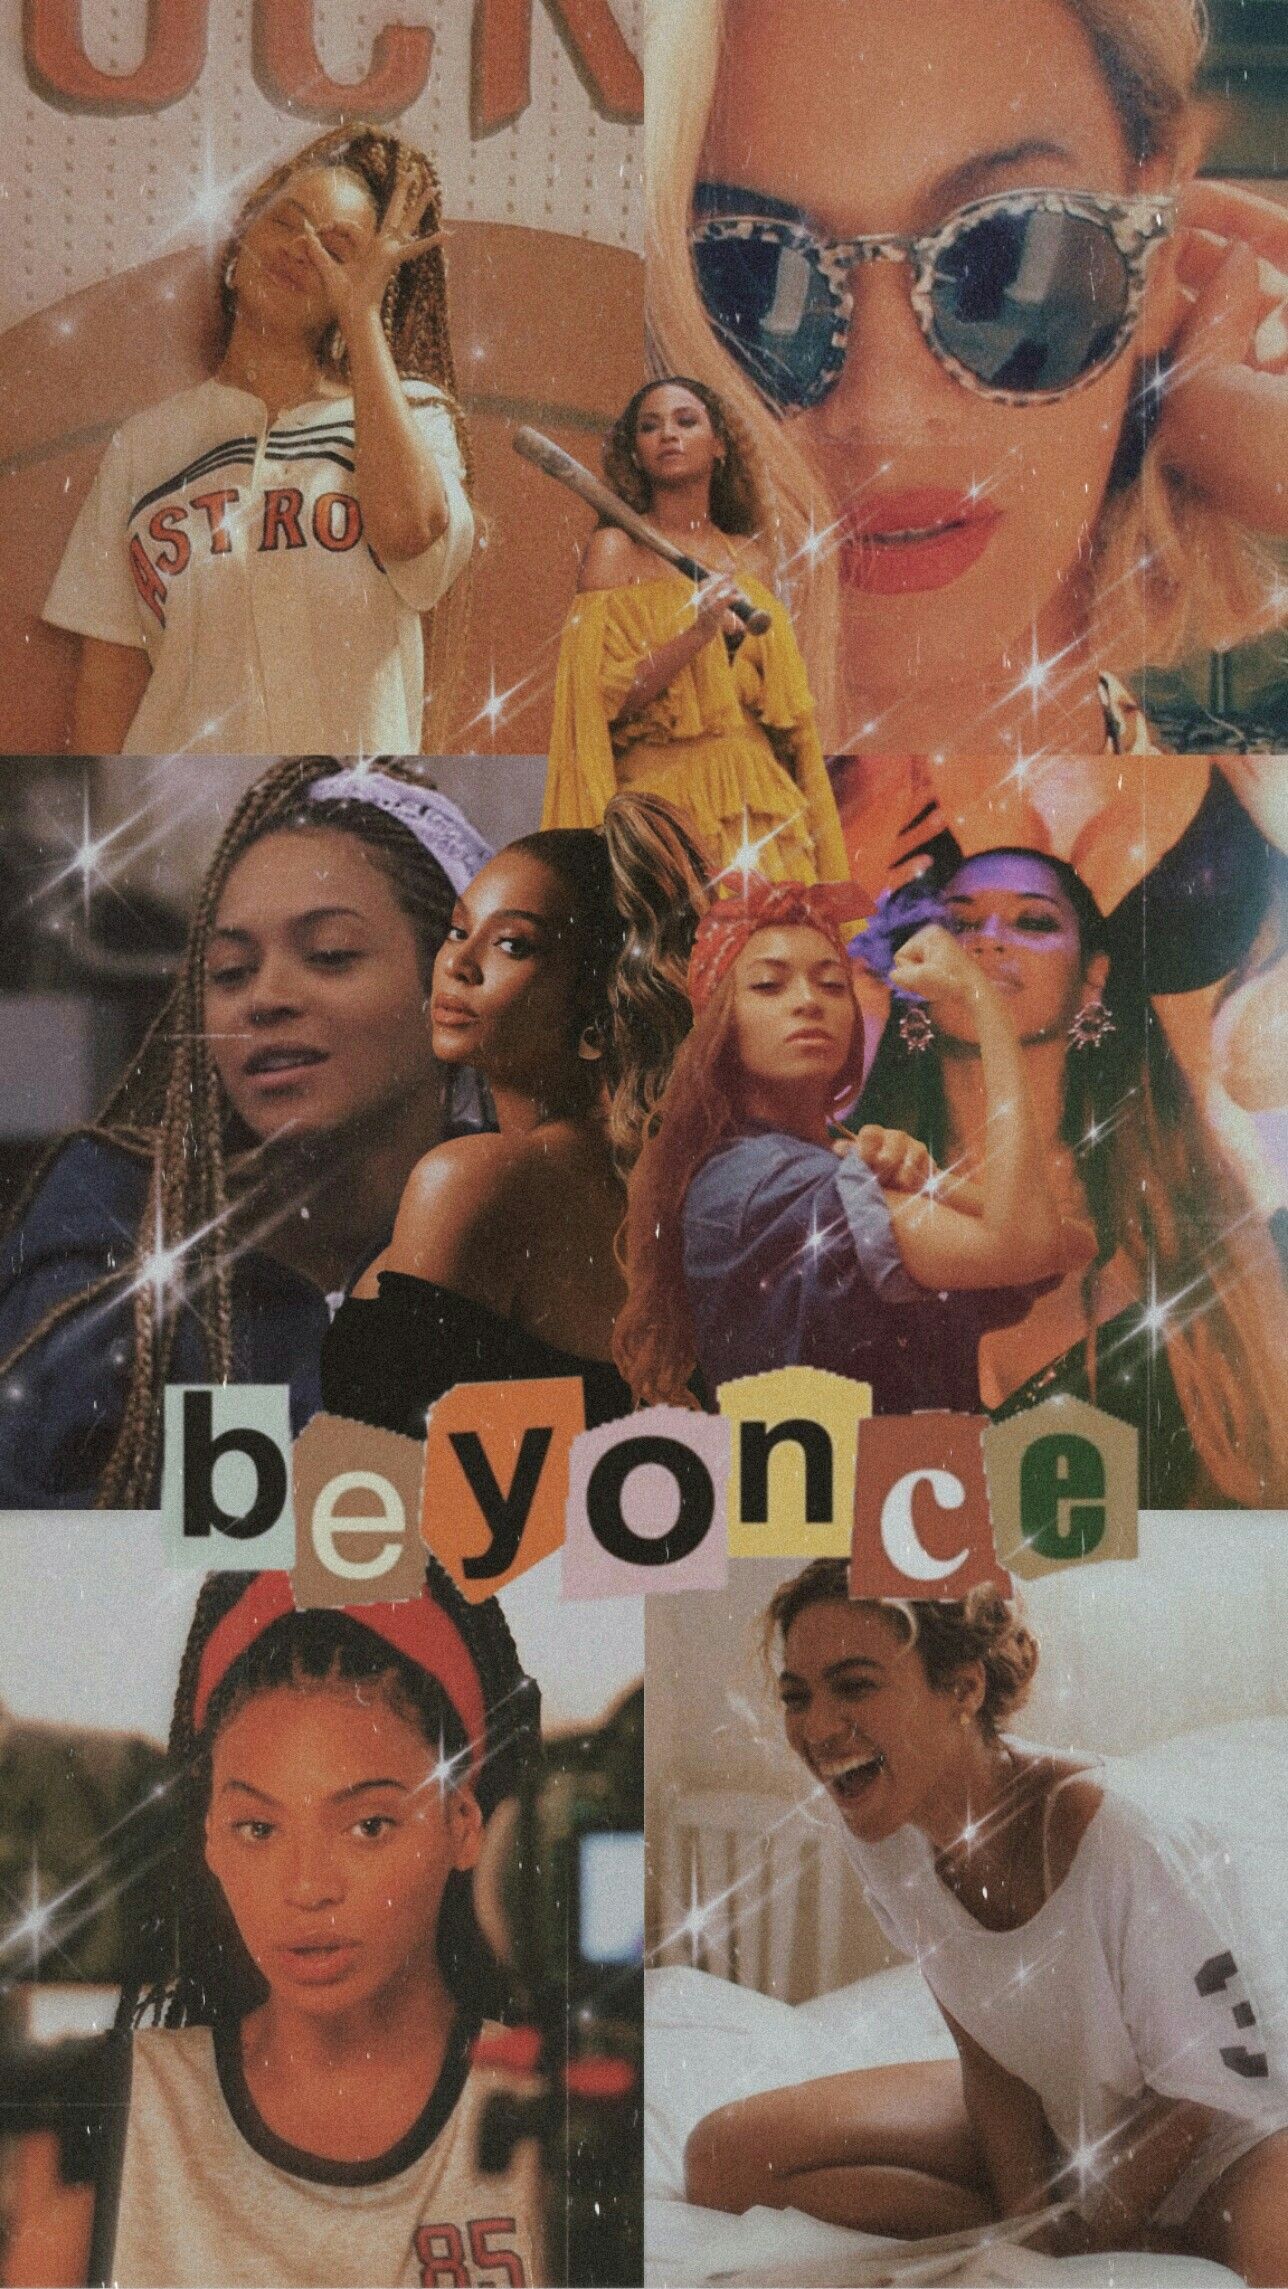 Beyoncé wallpaper. Bad girl wallpaper, Edgy wallpaper, iPhone wallpaper tumblr aesthetic